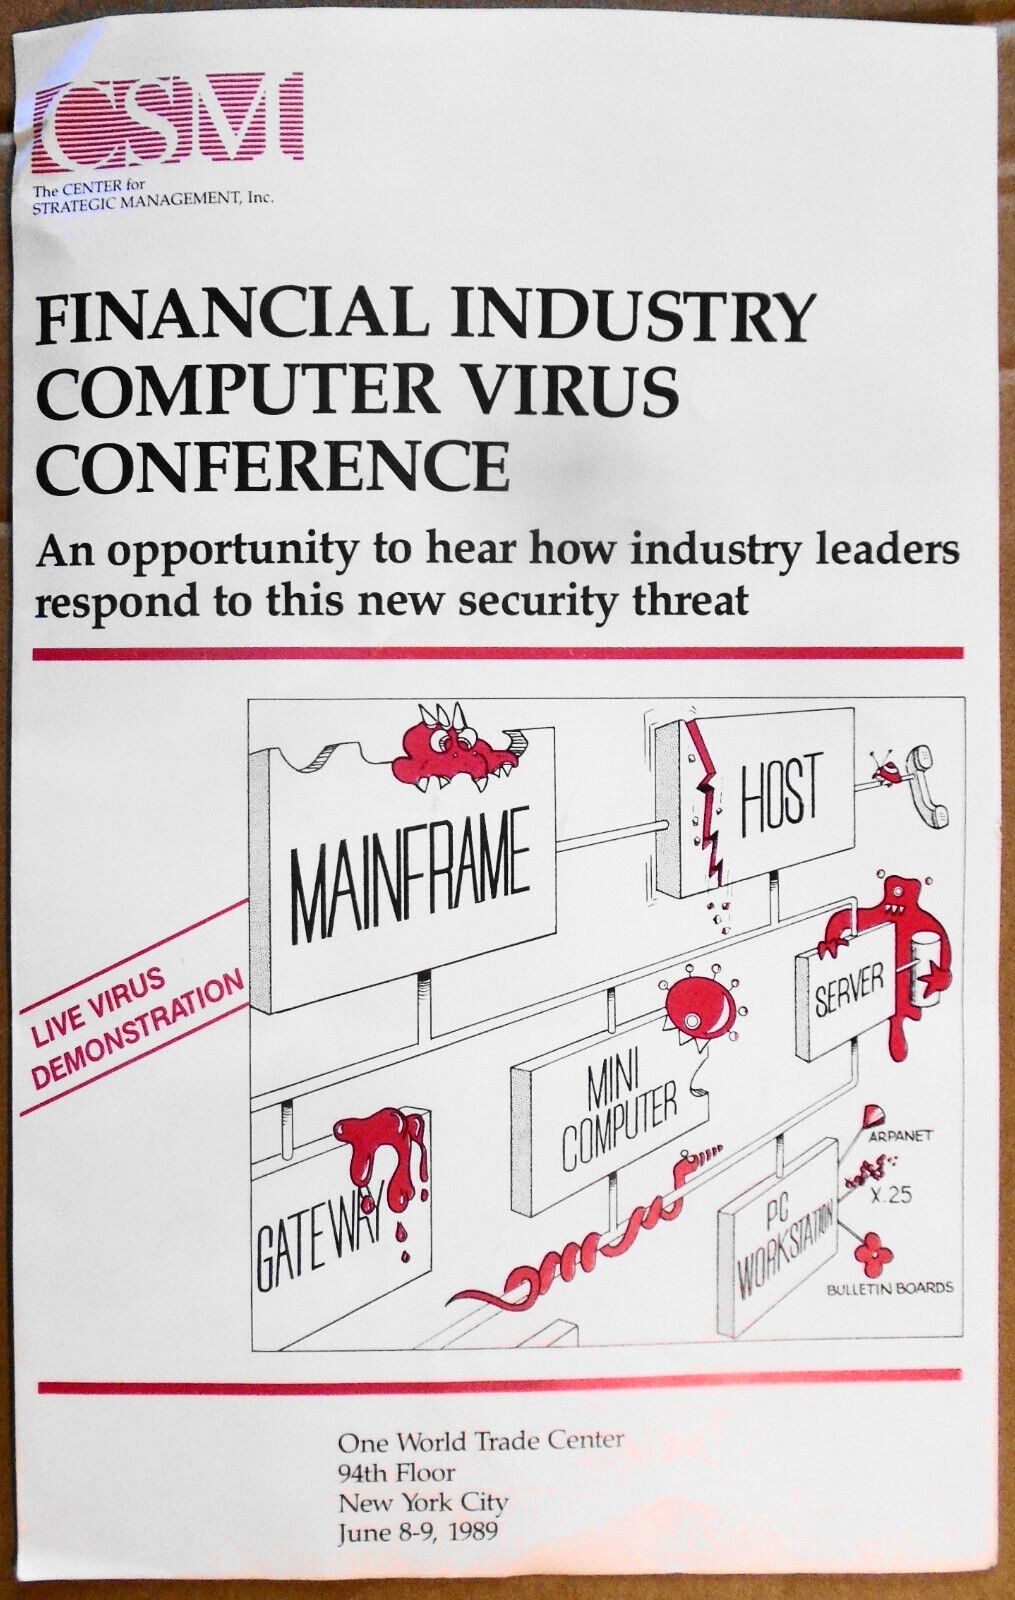 Financial Industry Computer Virus Conference Program - New York City, June, 1989